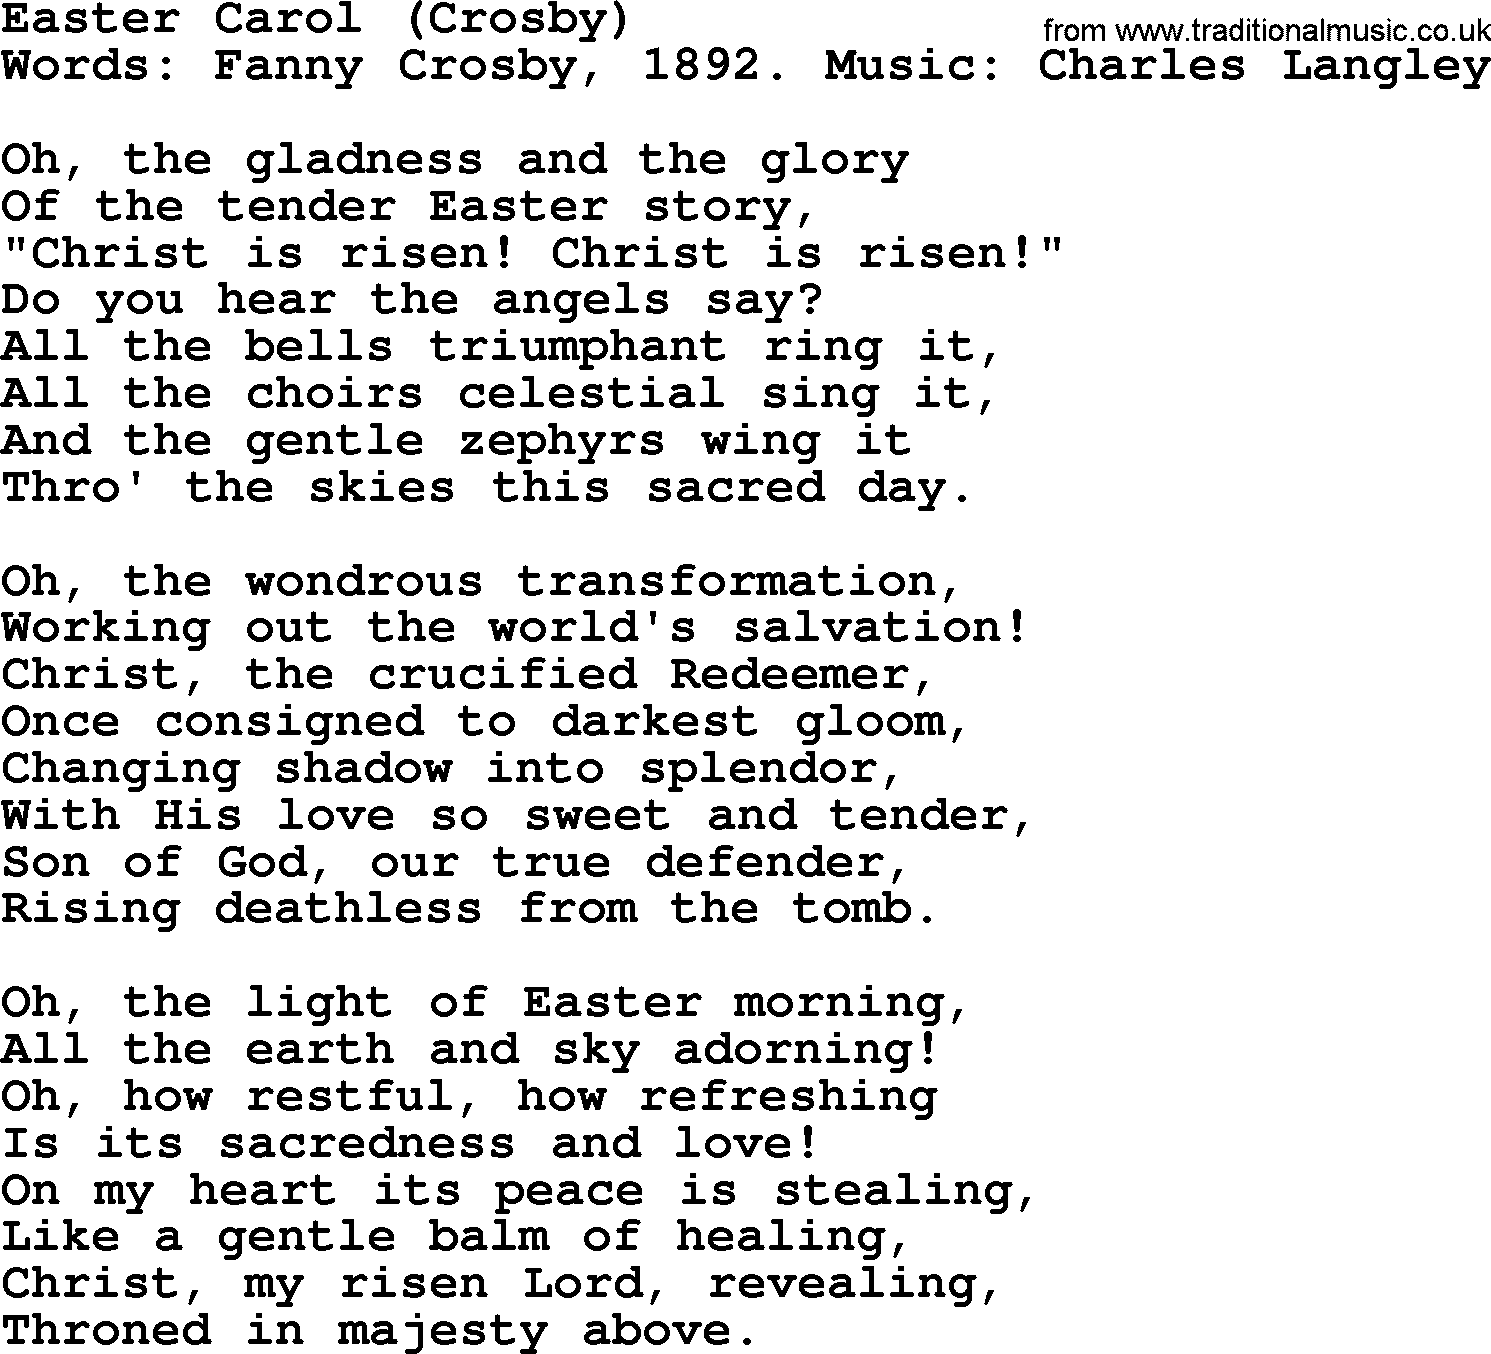 Fanny Crosby song: Easter Carol, lyrics